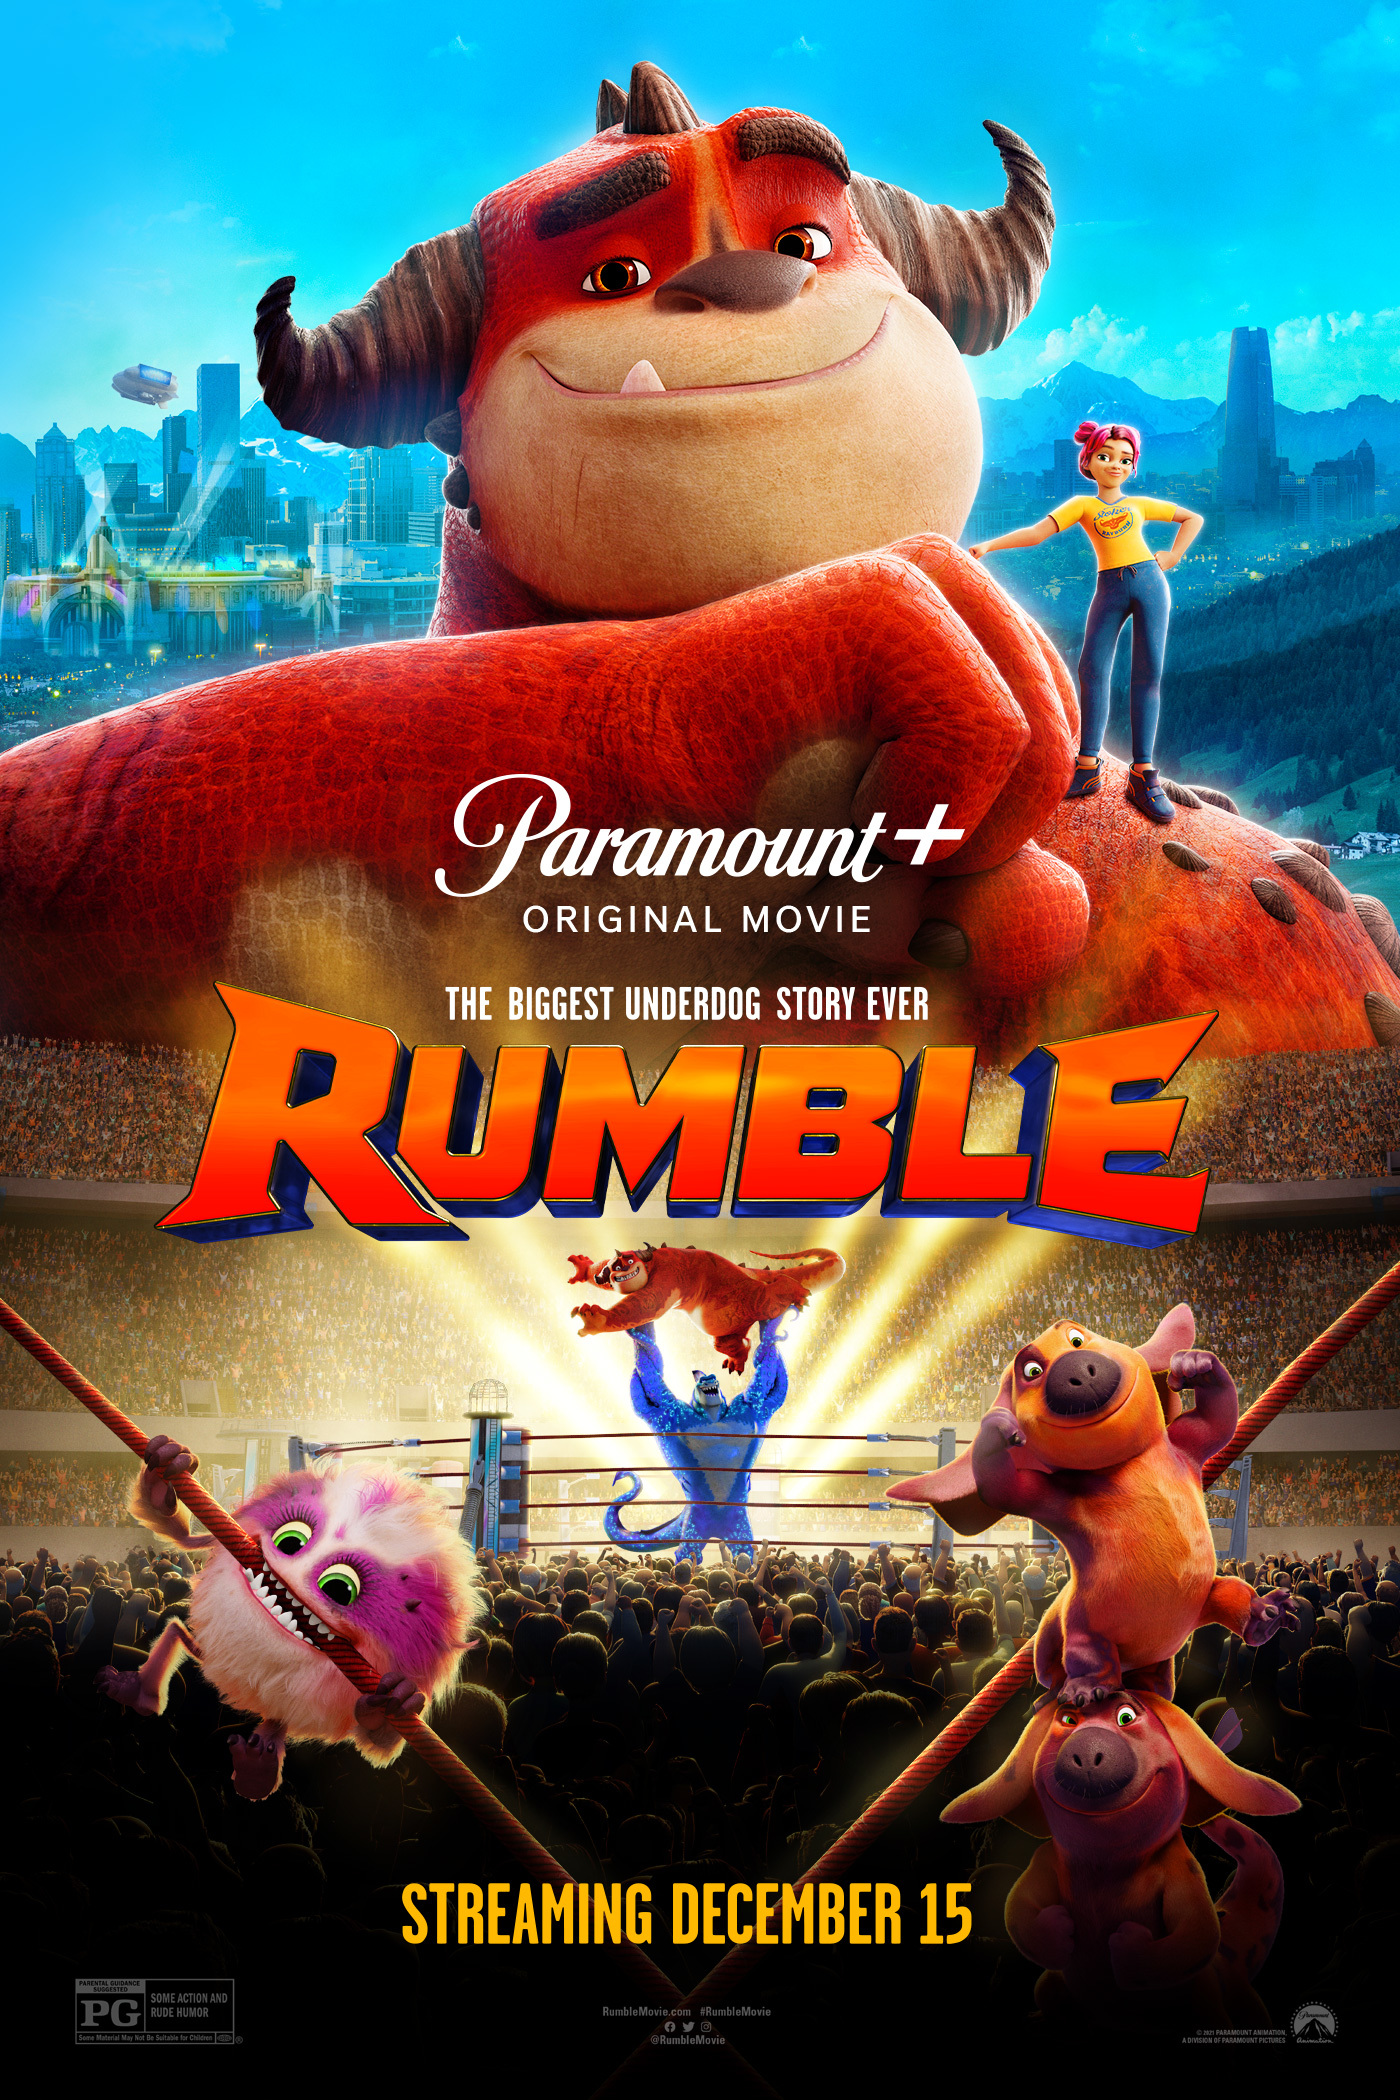 Stiahni si Filmy s titulkama  Rachot / Rumble (2021)[WebRip][1080p] = CSFD 59%